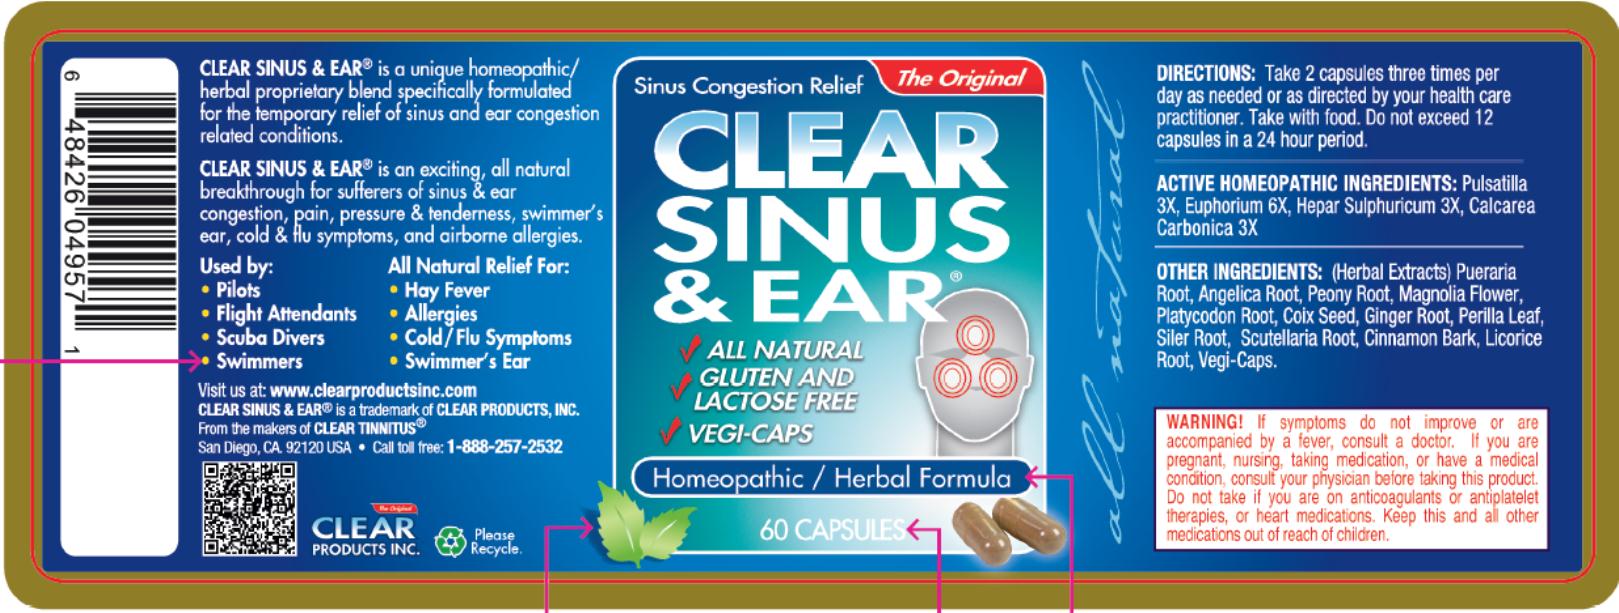 Principal Display Panel
Sinus Congestion Relief
The Original
CLEAR SINUS & EAR® 
ALL NATURAL
GLUTEN AND LACTOSE FREE
VEGI-CAPS
Homeopathic / Herbal Formula
60 CAPSULES